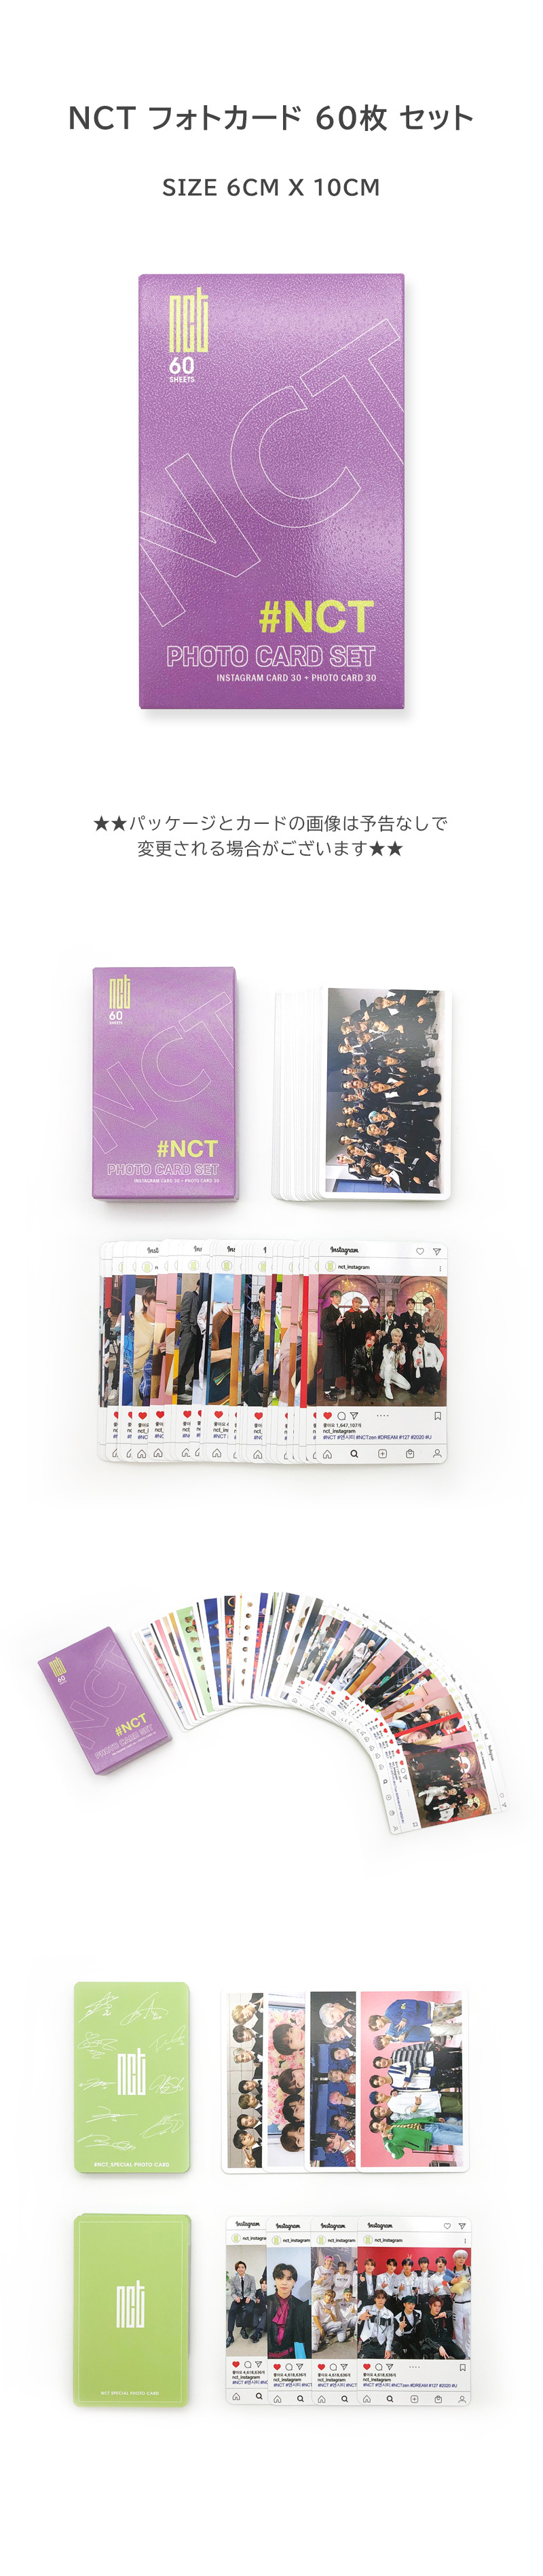 NCT NATION フォトカード コンプリート セット 60枚